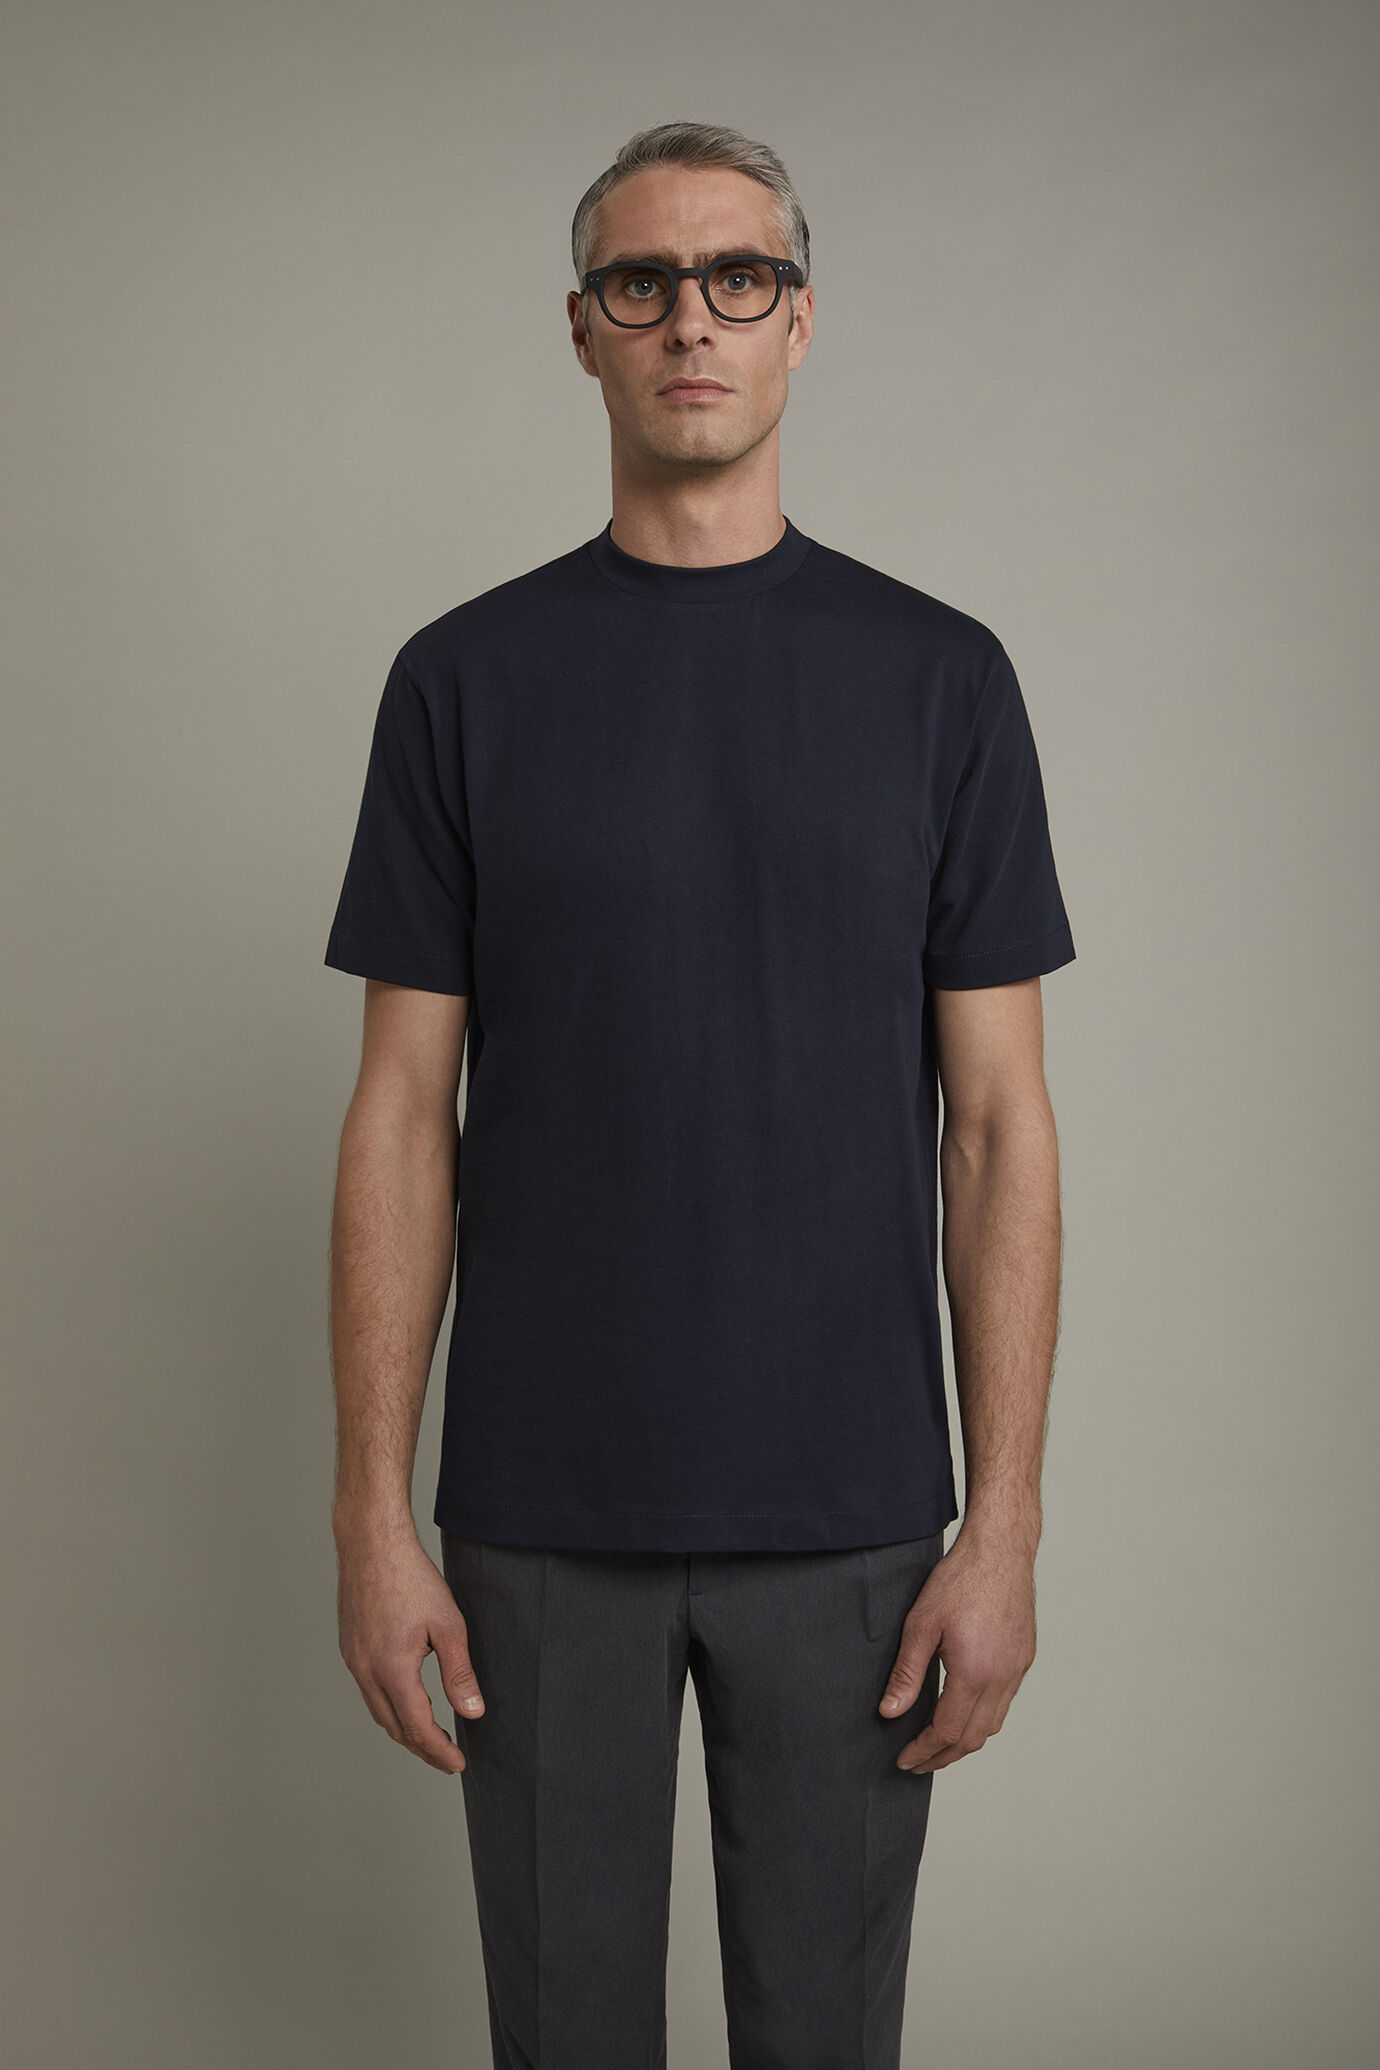 Men’s round neck t-shirt 100% cotton regular fit